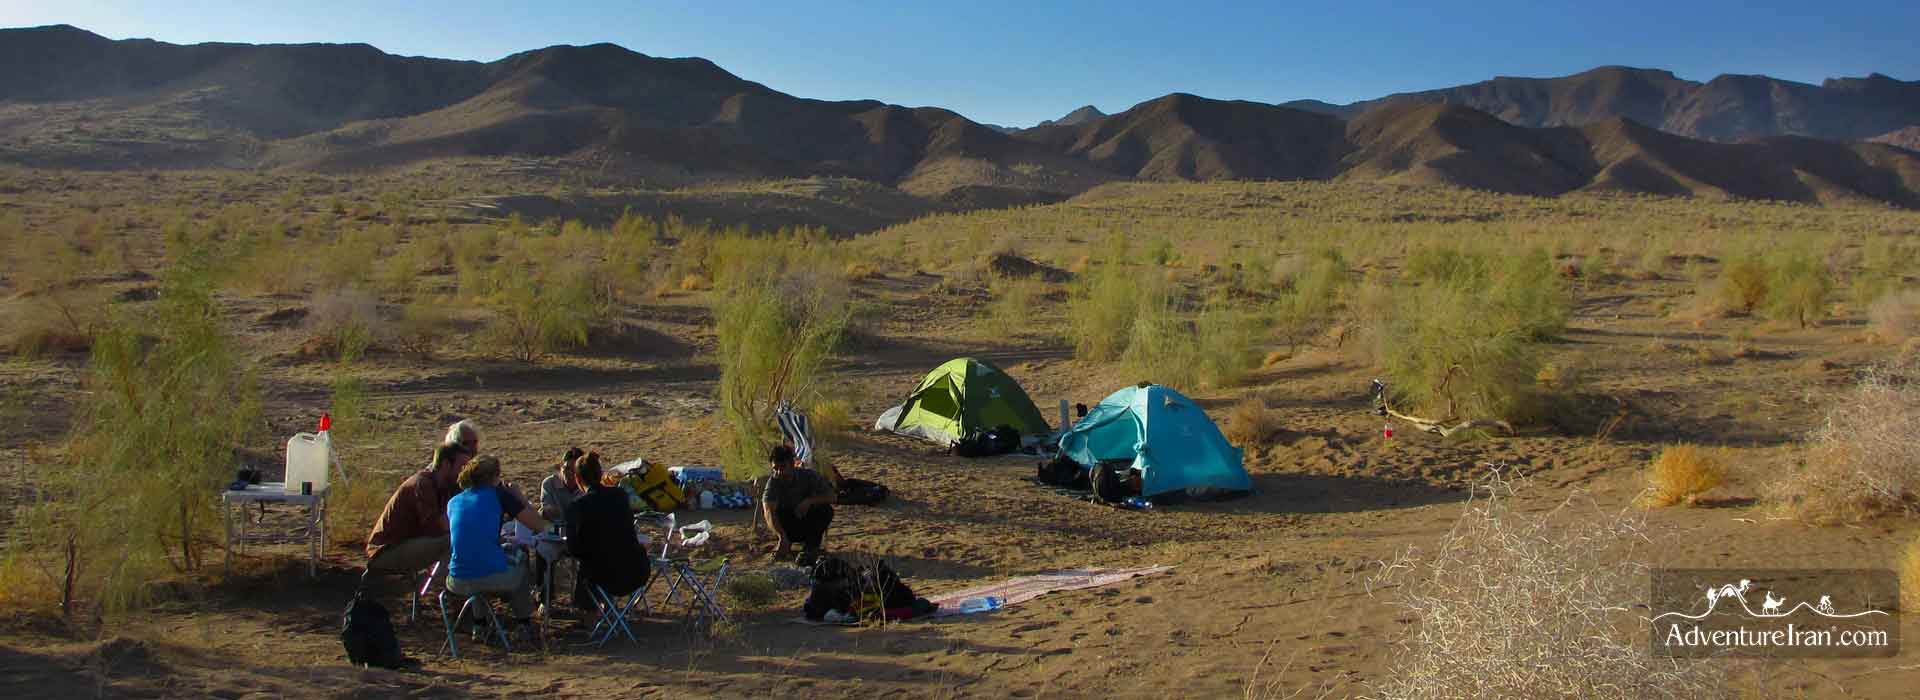 Desert Trekking and Camping in Iran Central Desert